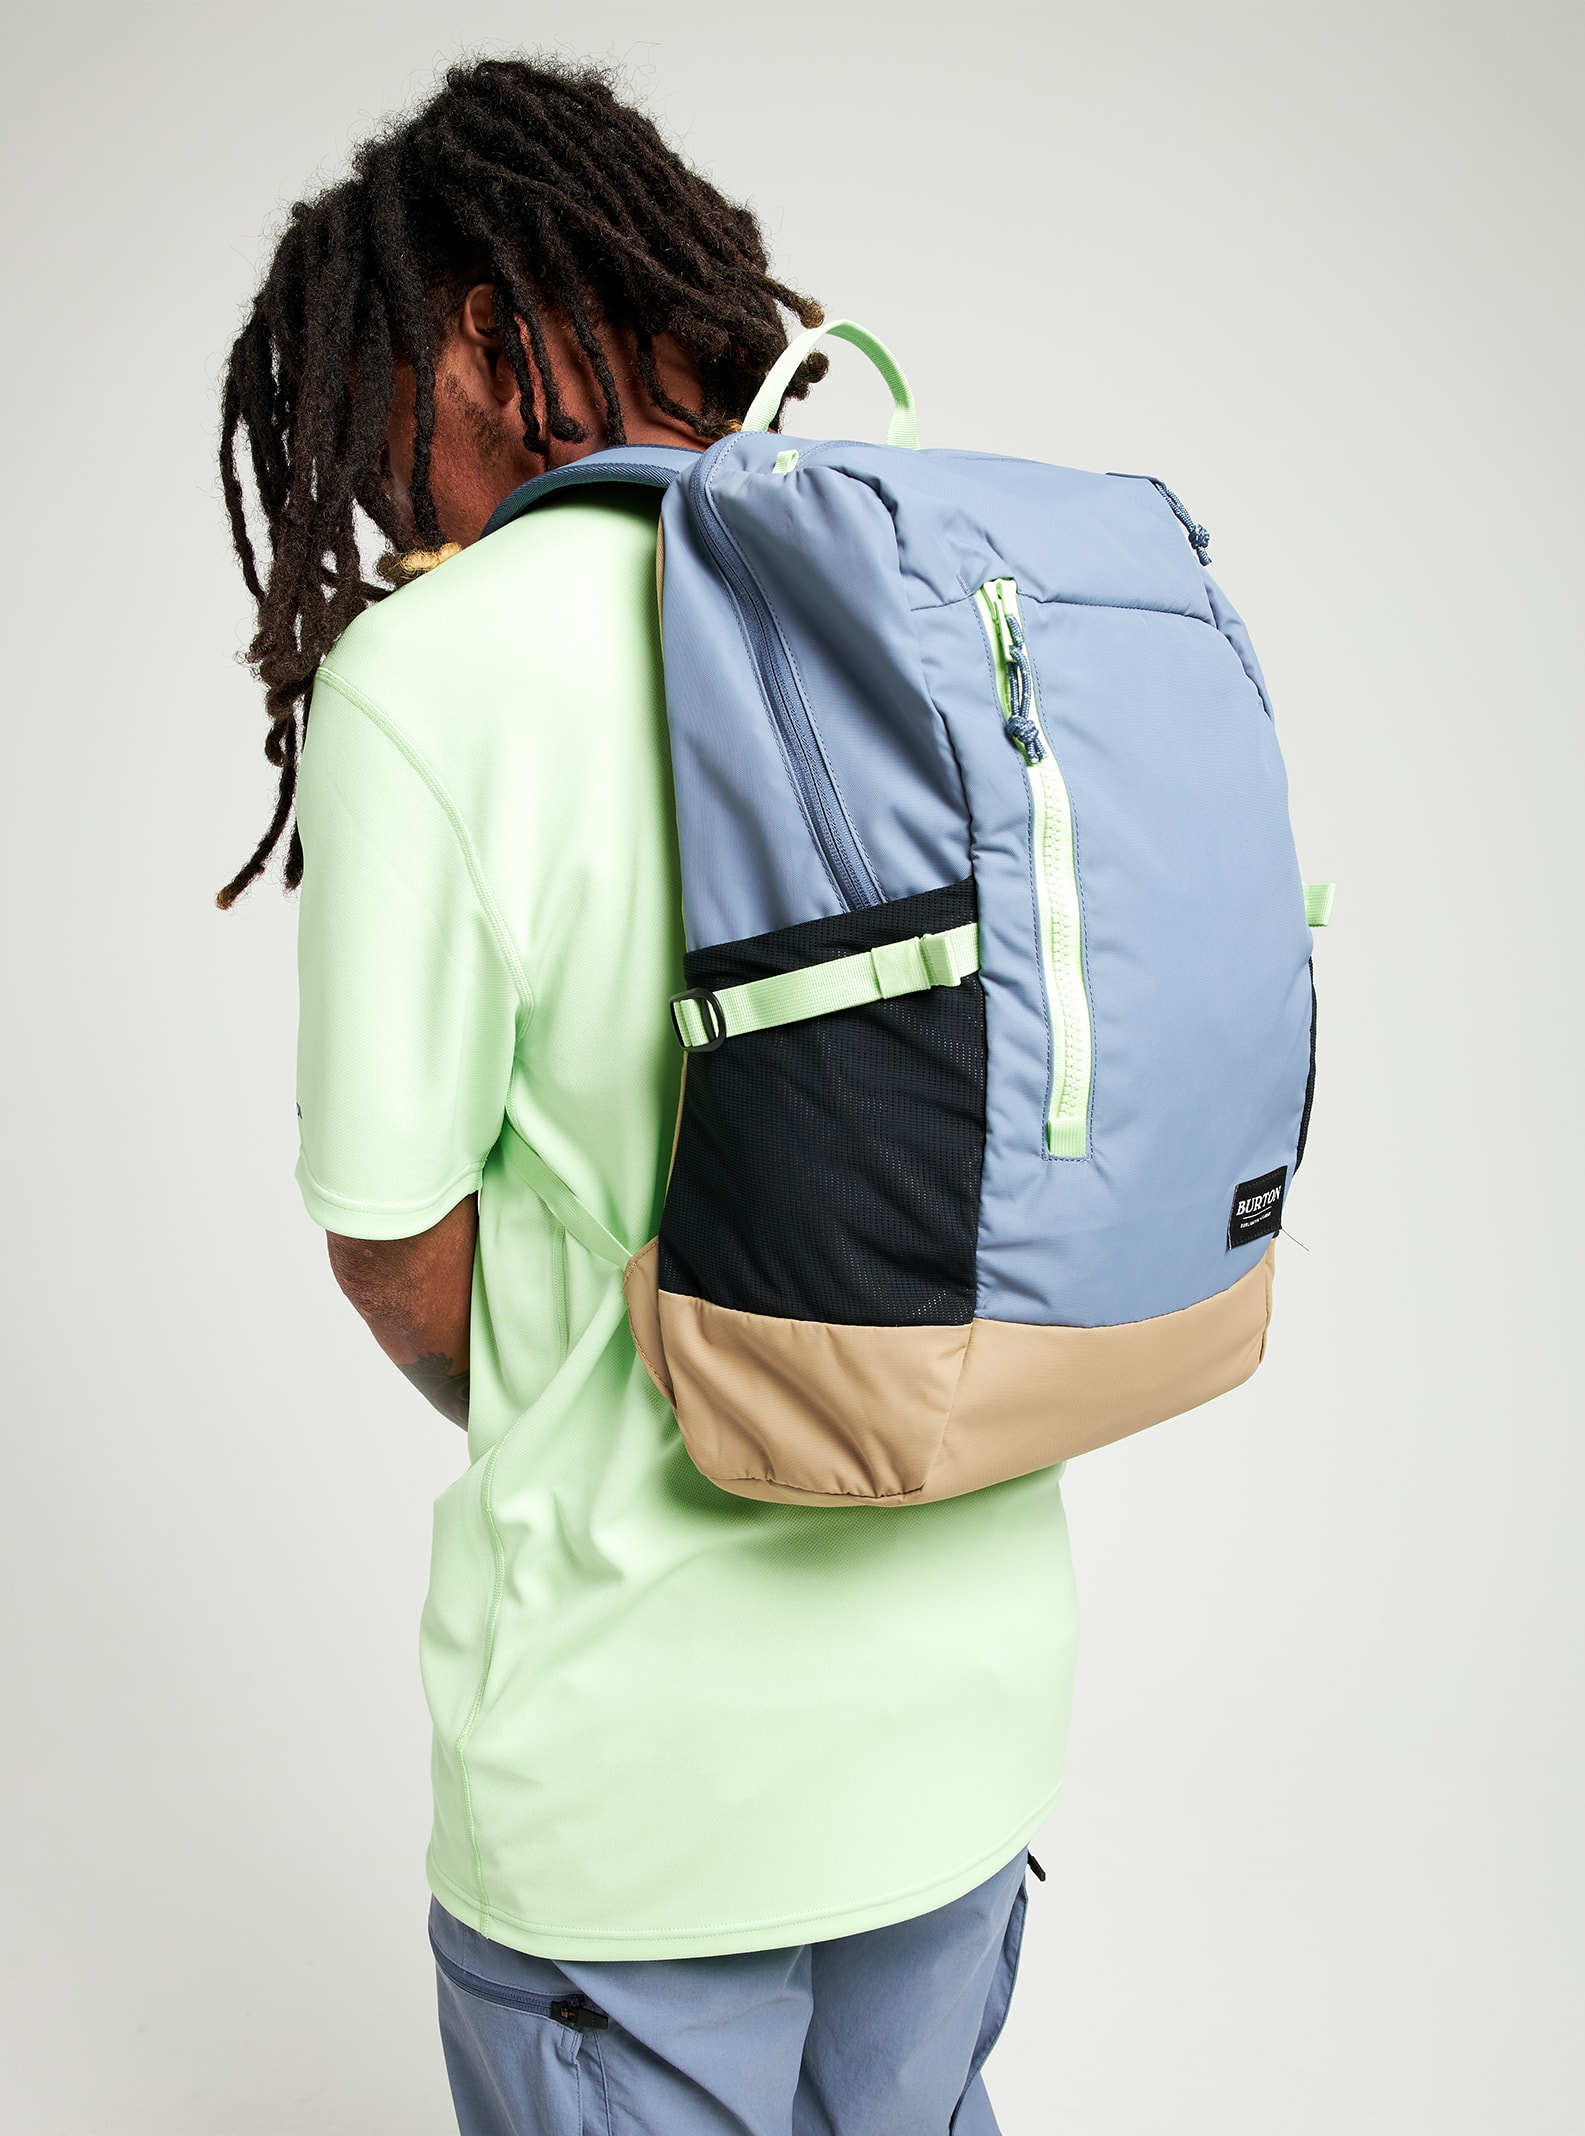 Backpacks | Burton Snowboards GB